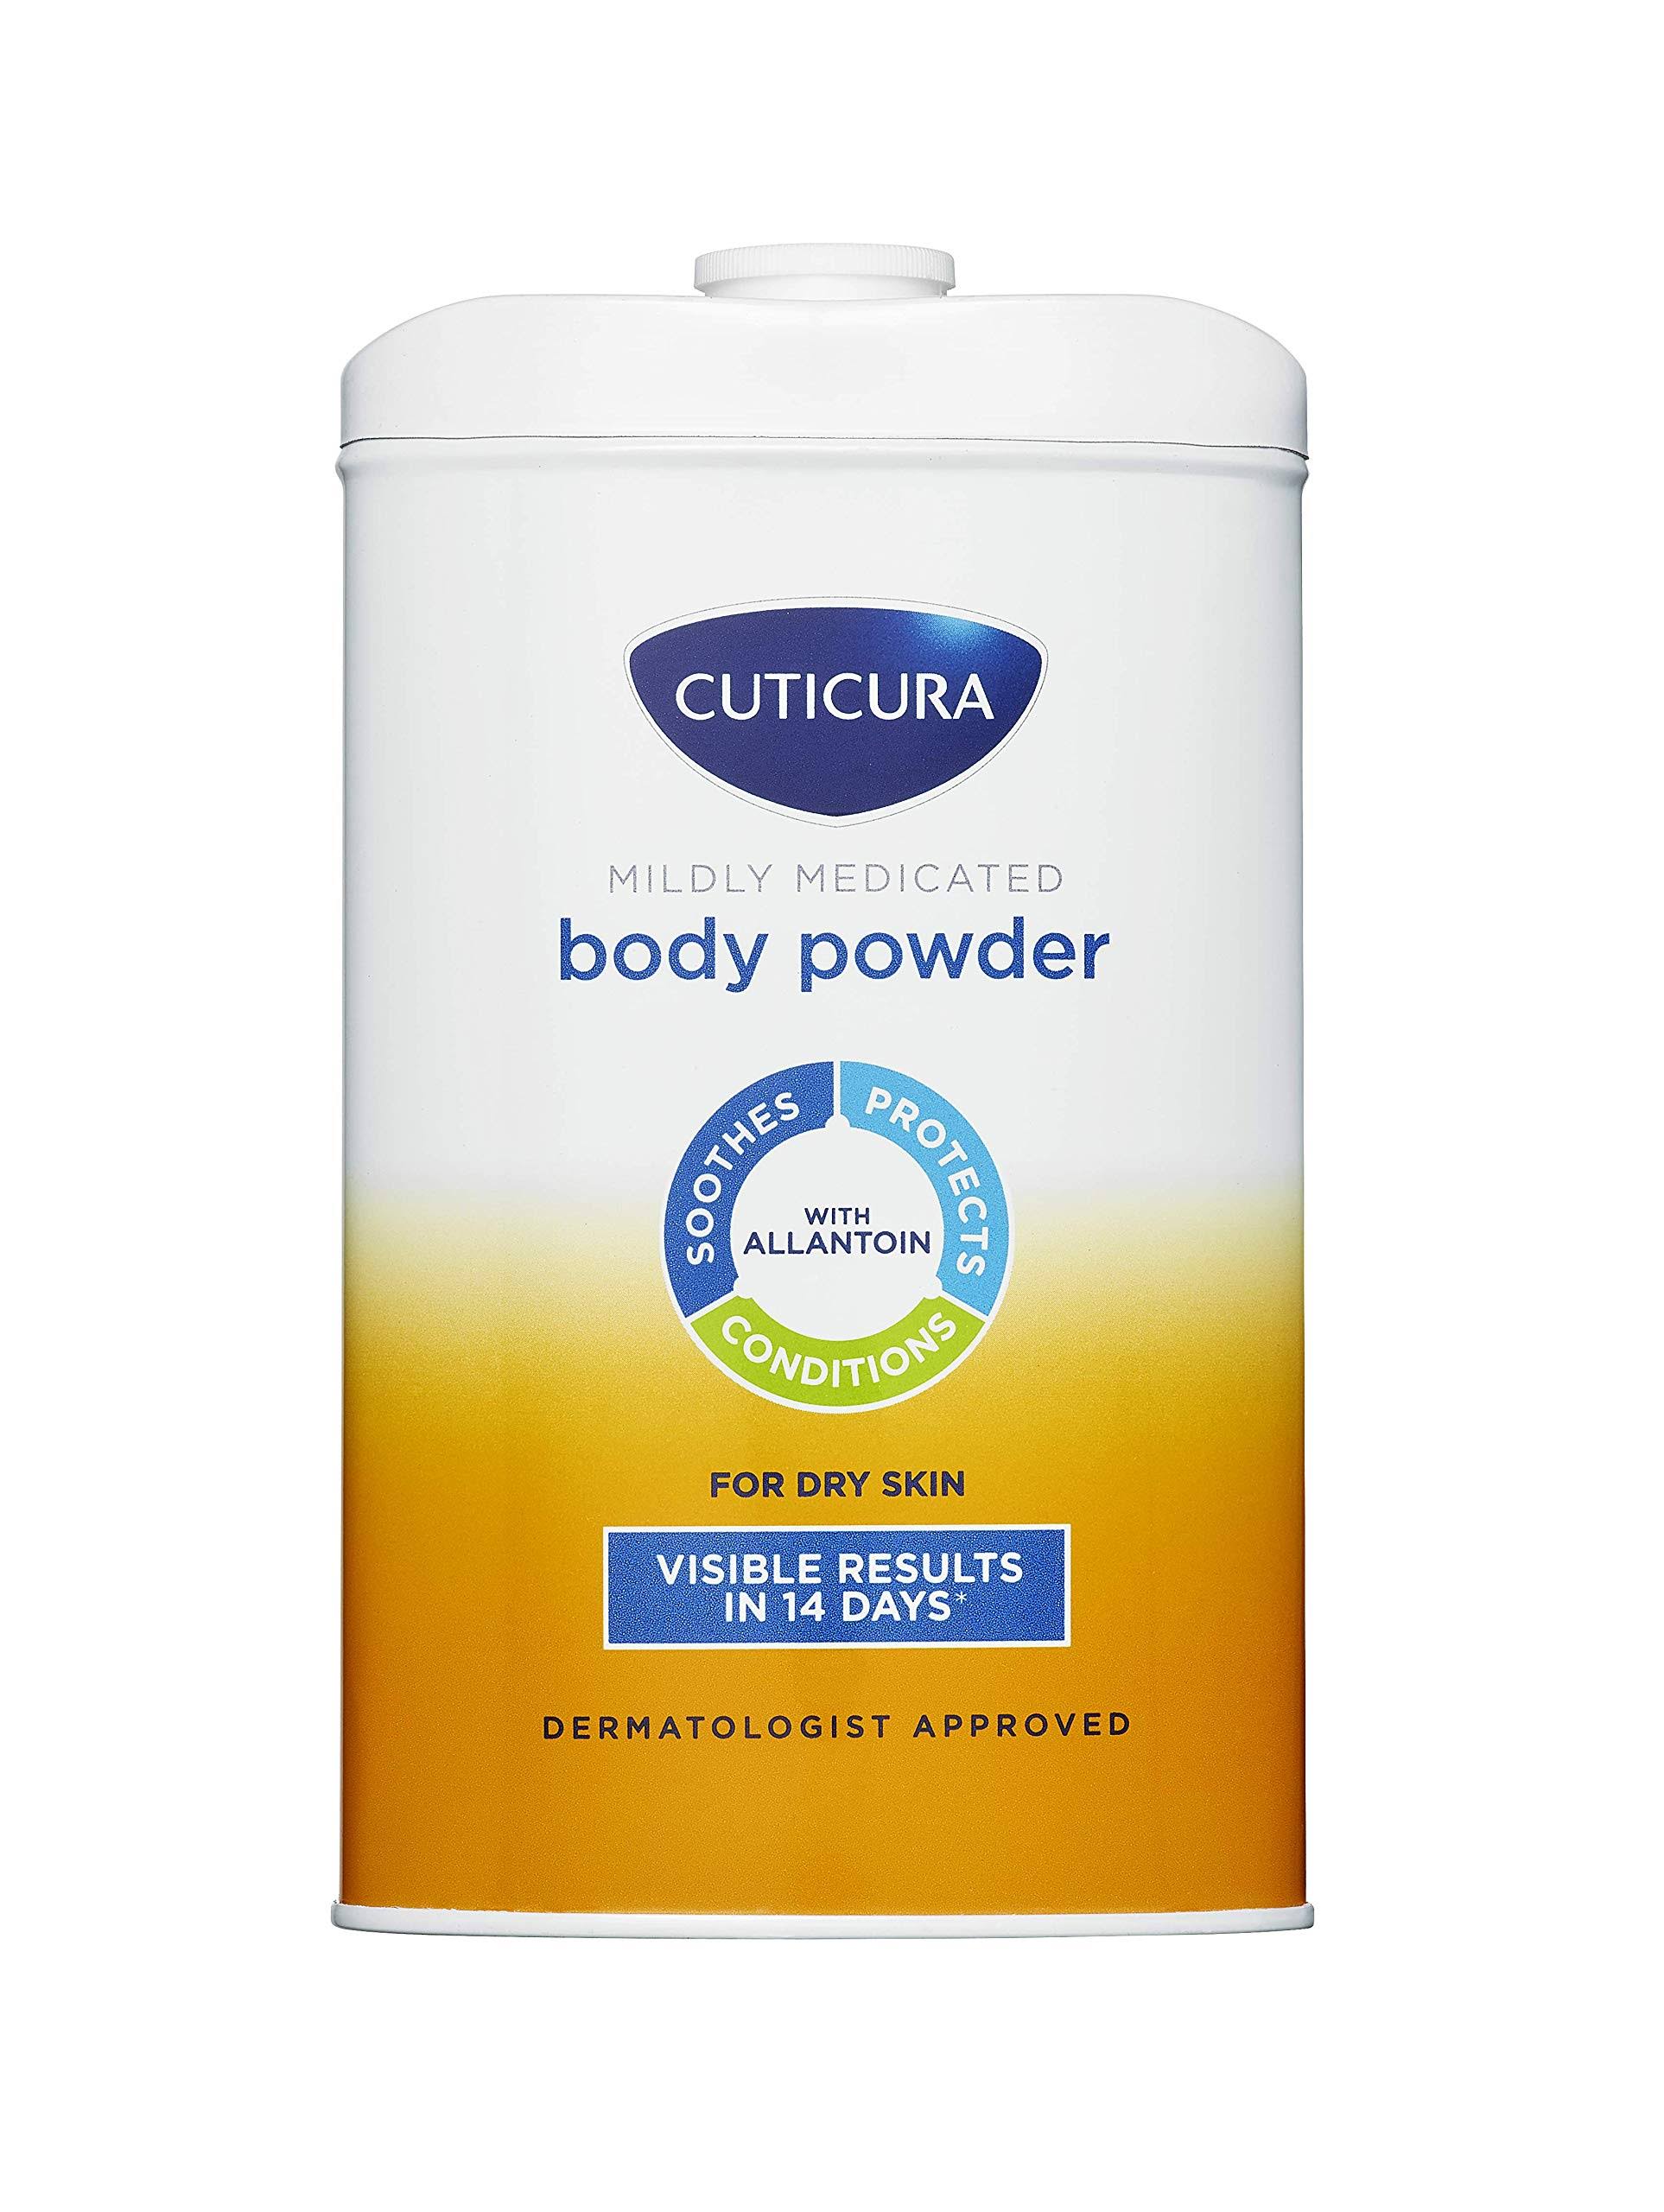 Cuticura Talcum Powder - 250g, Mildly Medicated